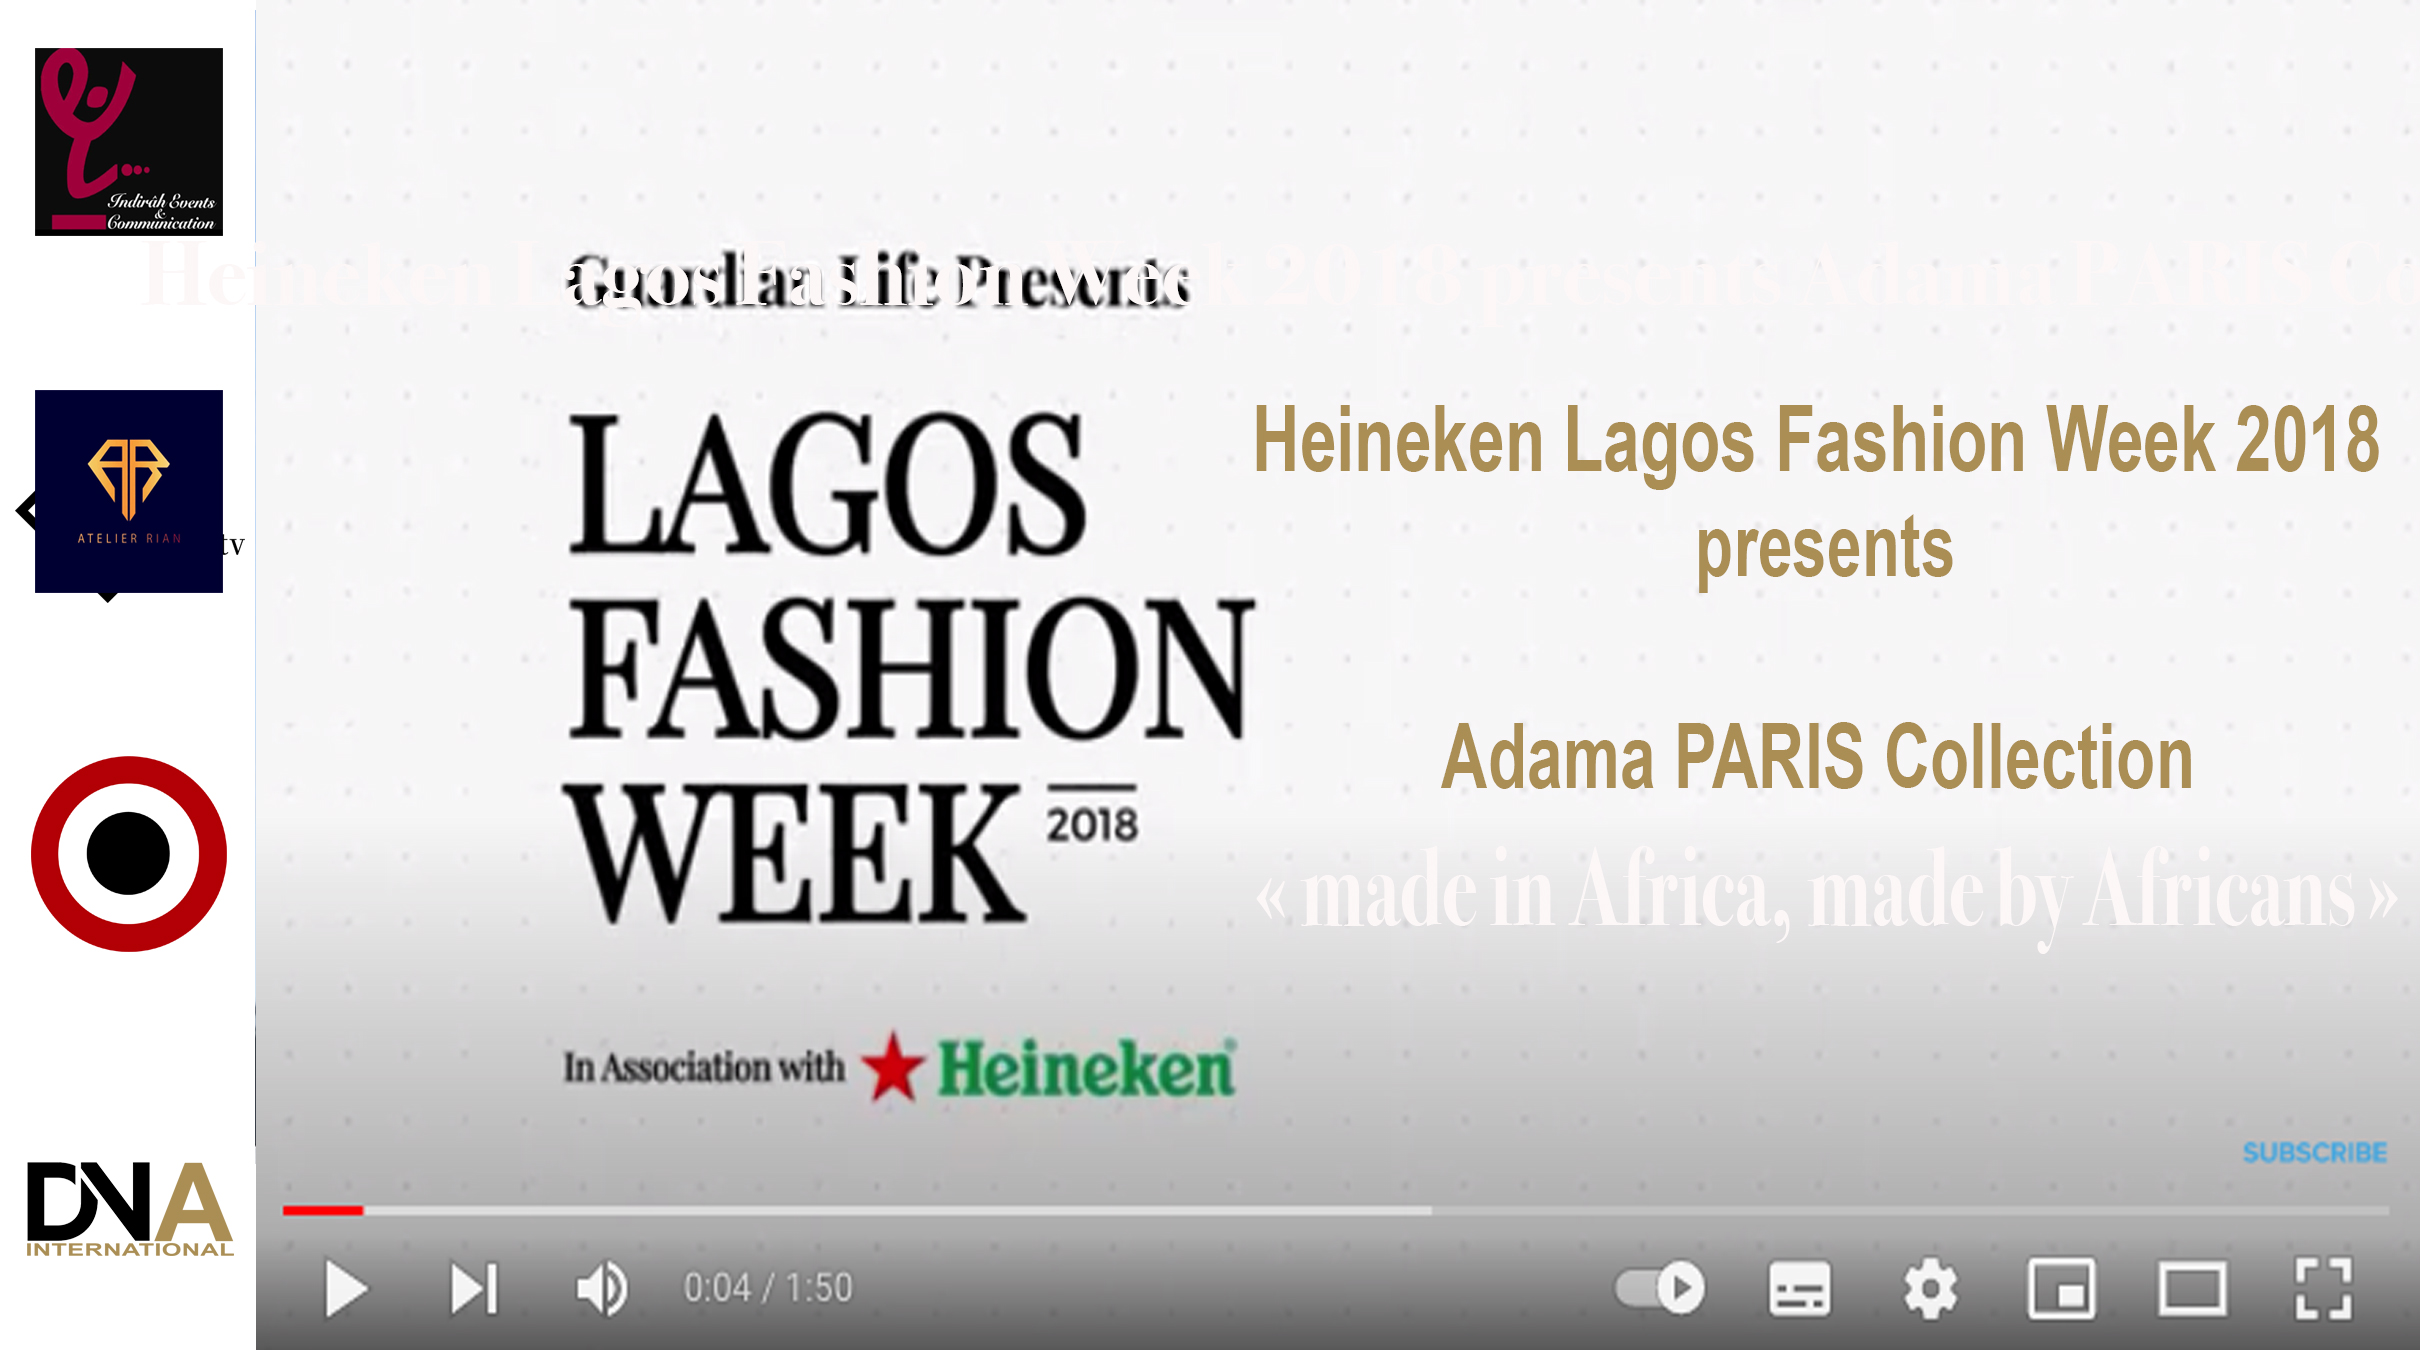 AFRICA-VOGUE-COVER-Heineken-Lagos-Fashion-Week-2018-presents-Adama-PARIS-Collection-DN-AFRICA-DN-A-INTERNATIONAL-Media-Partner